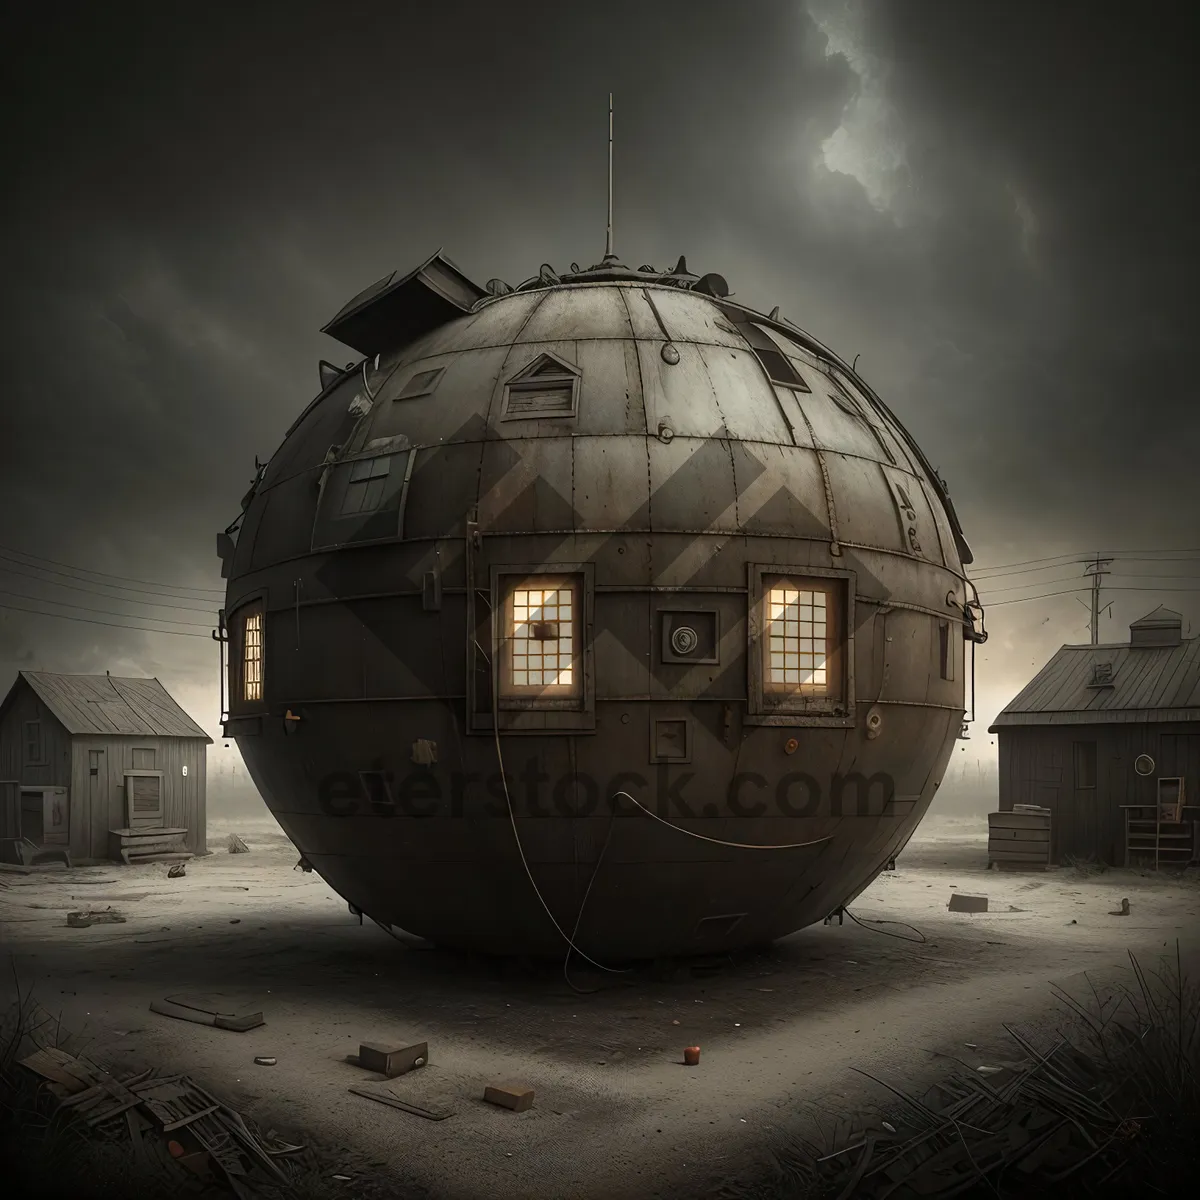 Picture of Sphere Dome - Iconic Planetarium Building